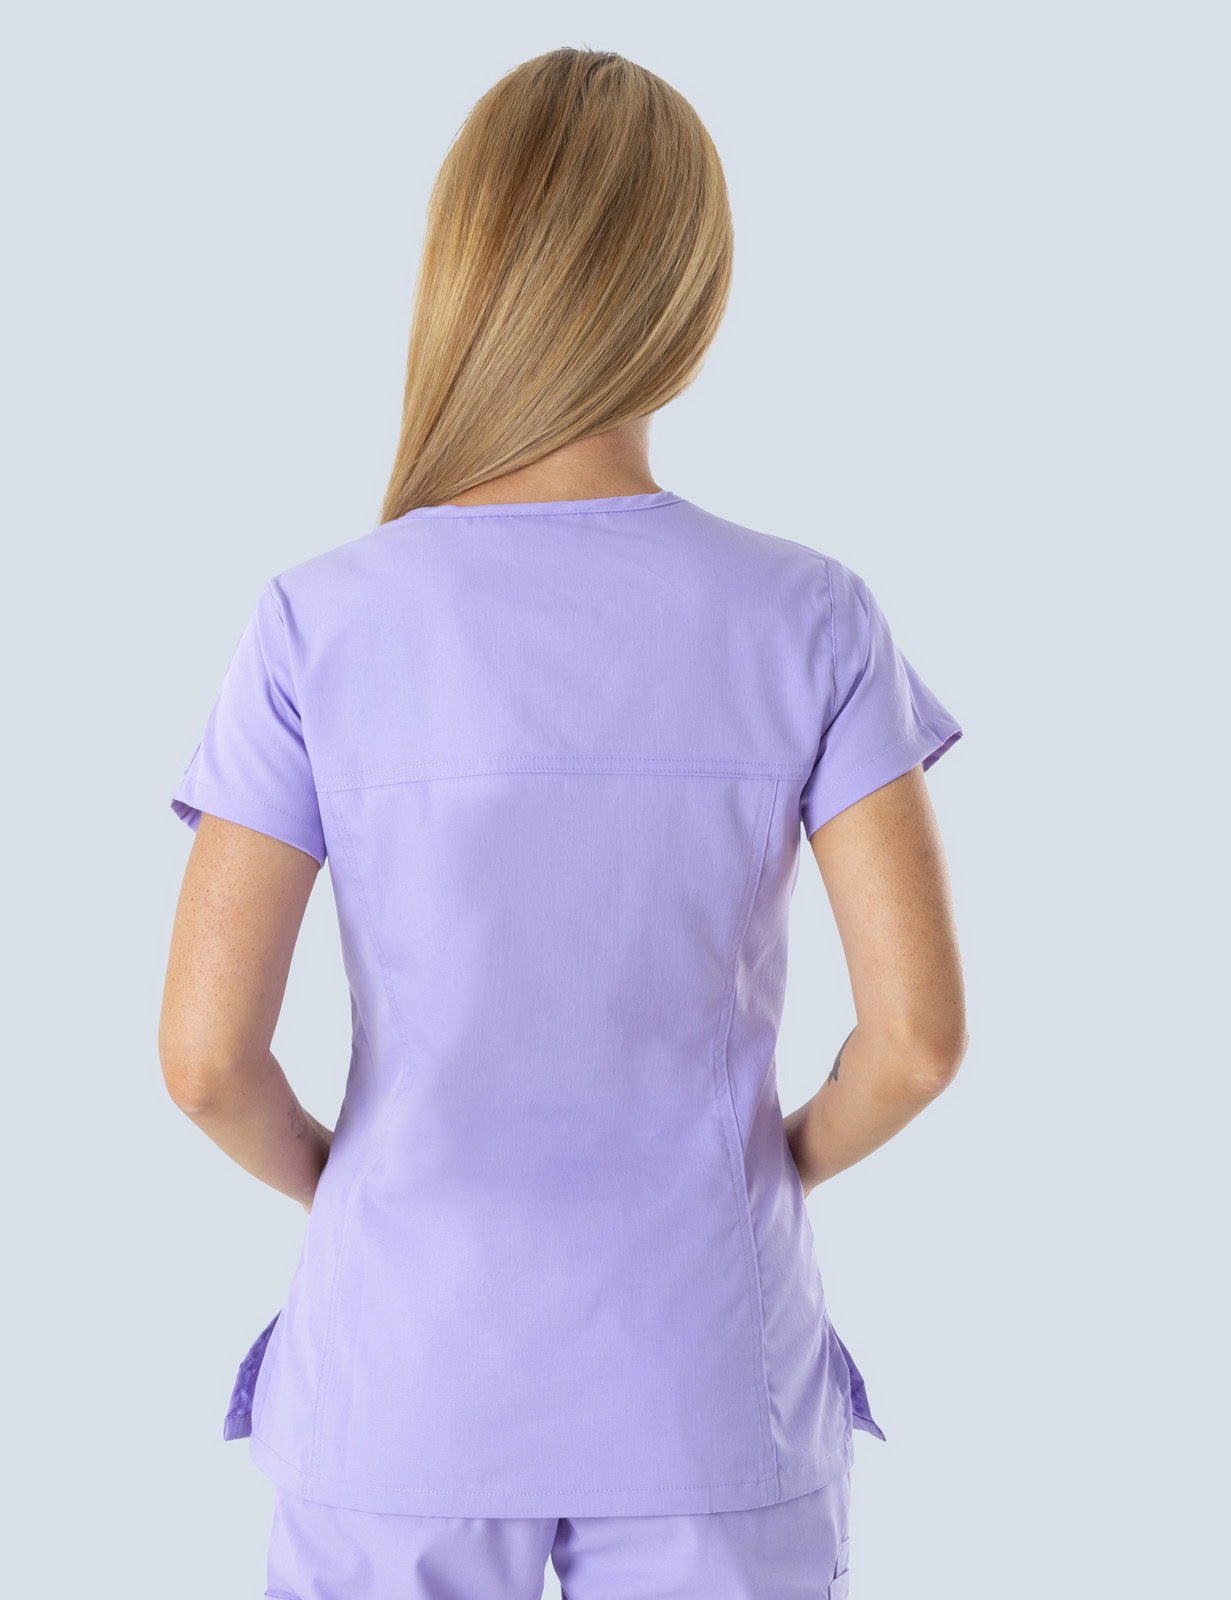 Queensland Children's Hospital Emergency Department Assistant Nurse Unit Manager Uniform Top Bundle  (Women's Fit Top in Lilac incl Logos)